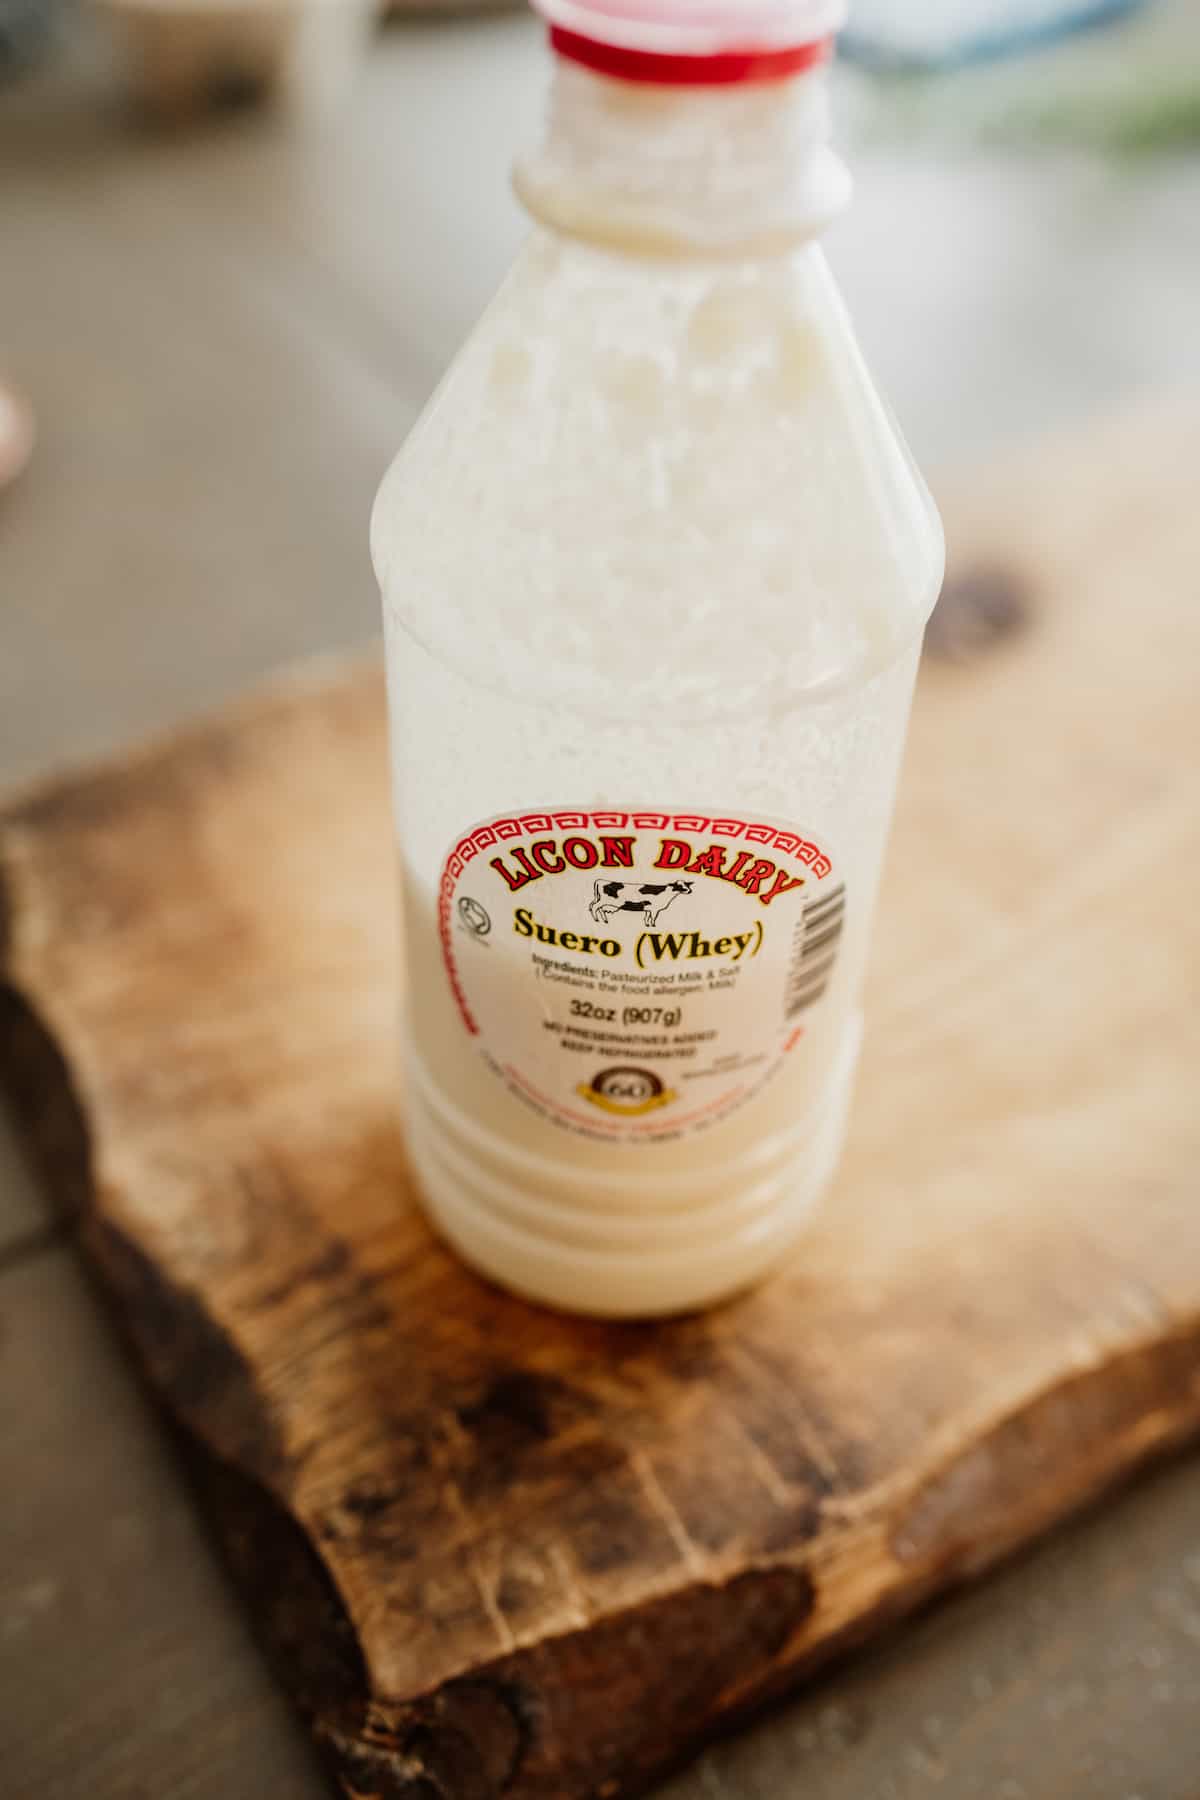 plastic bottle of suero (whey) from Lincon Dairy in El Paso San Eli Texas on a wooden board